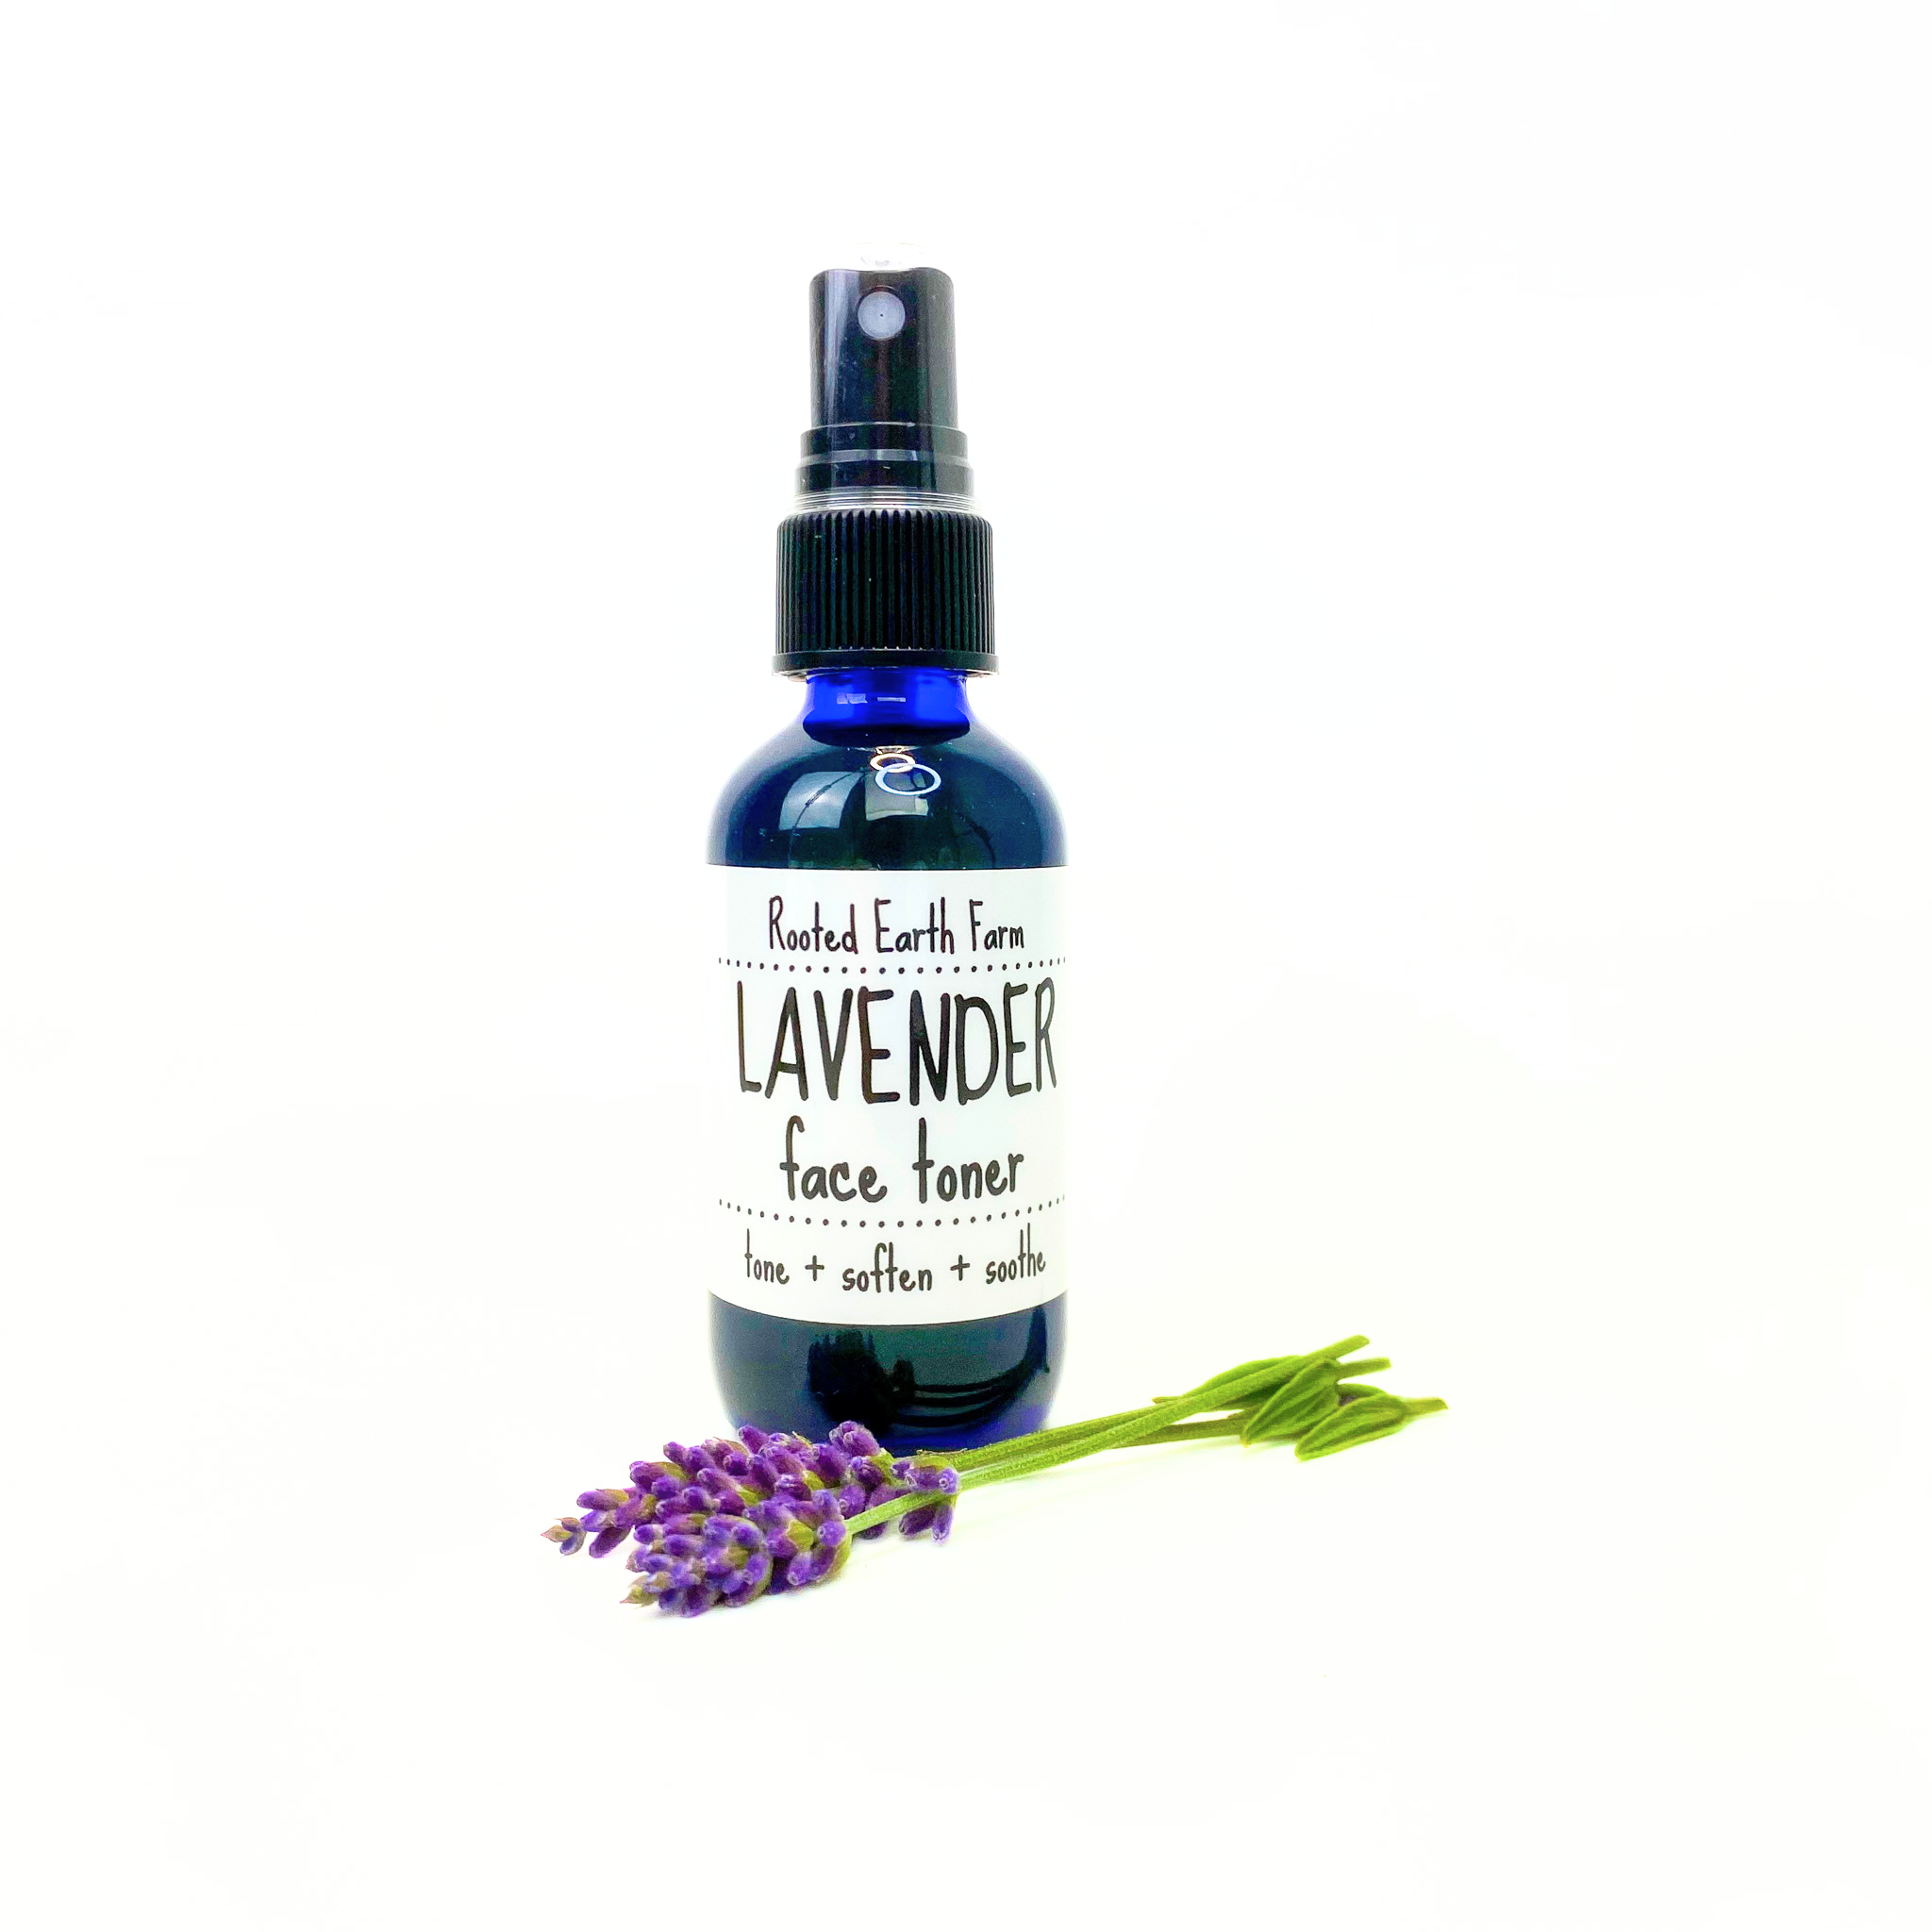 Ooh La La Lavender Hydrant Toner 8 Oz – Best Face & Body